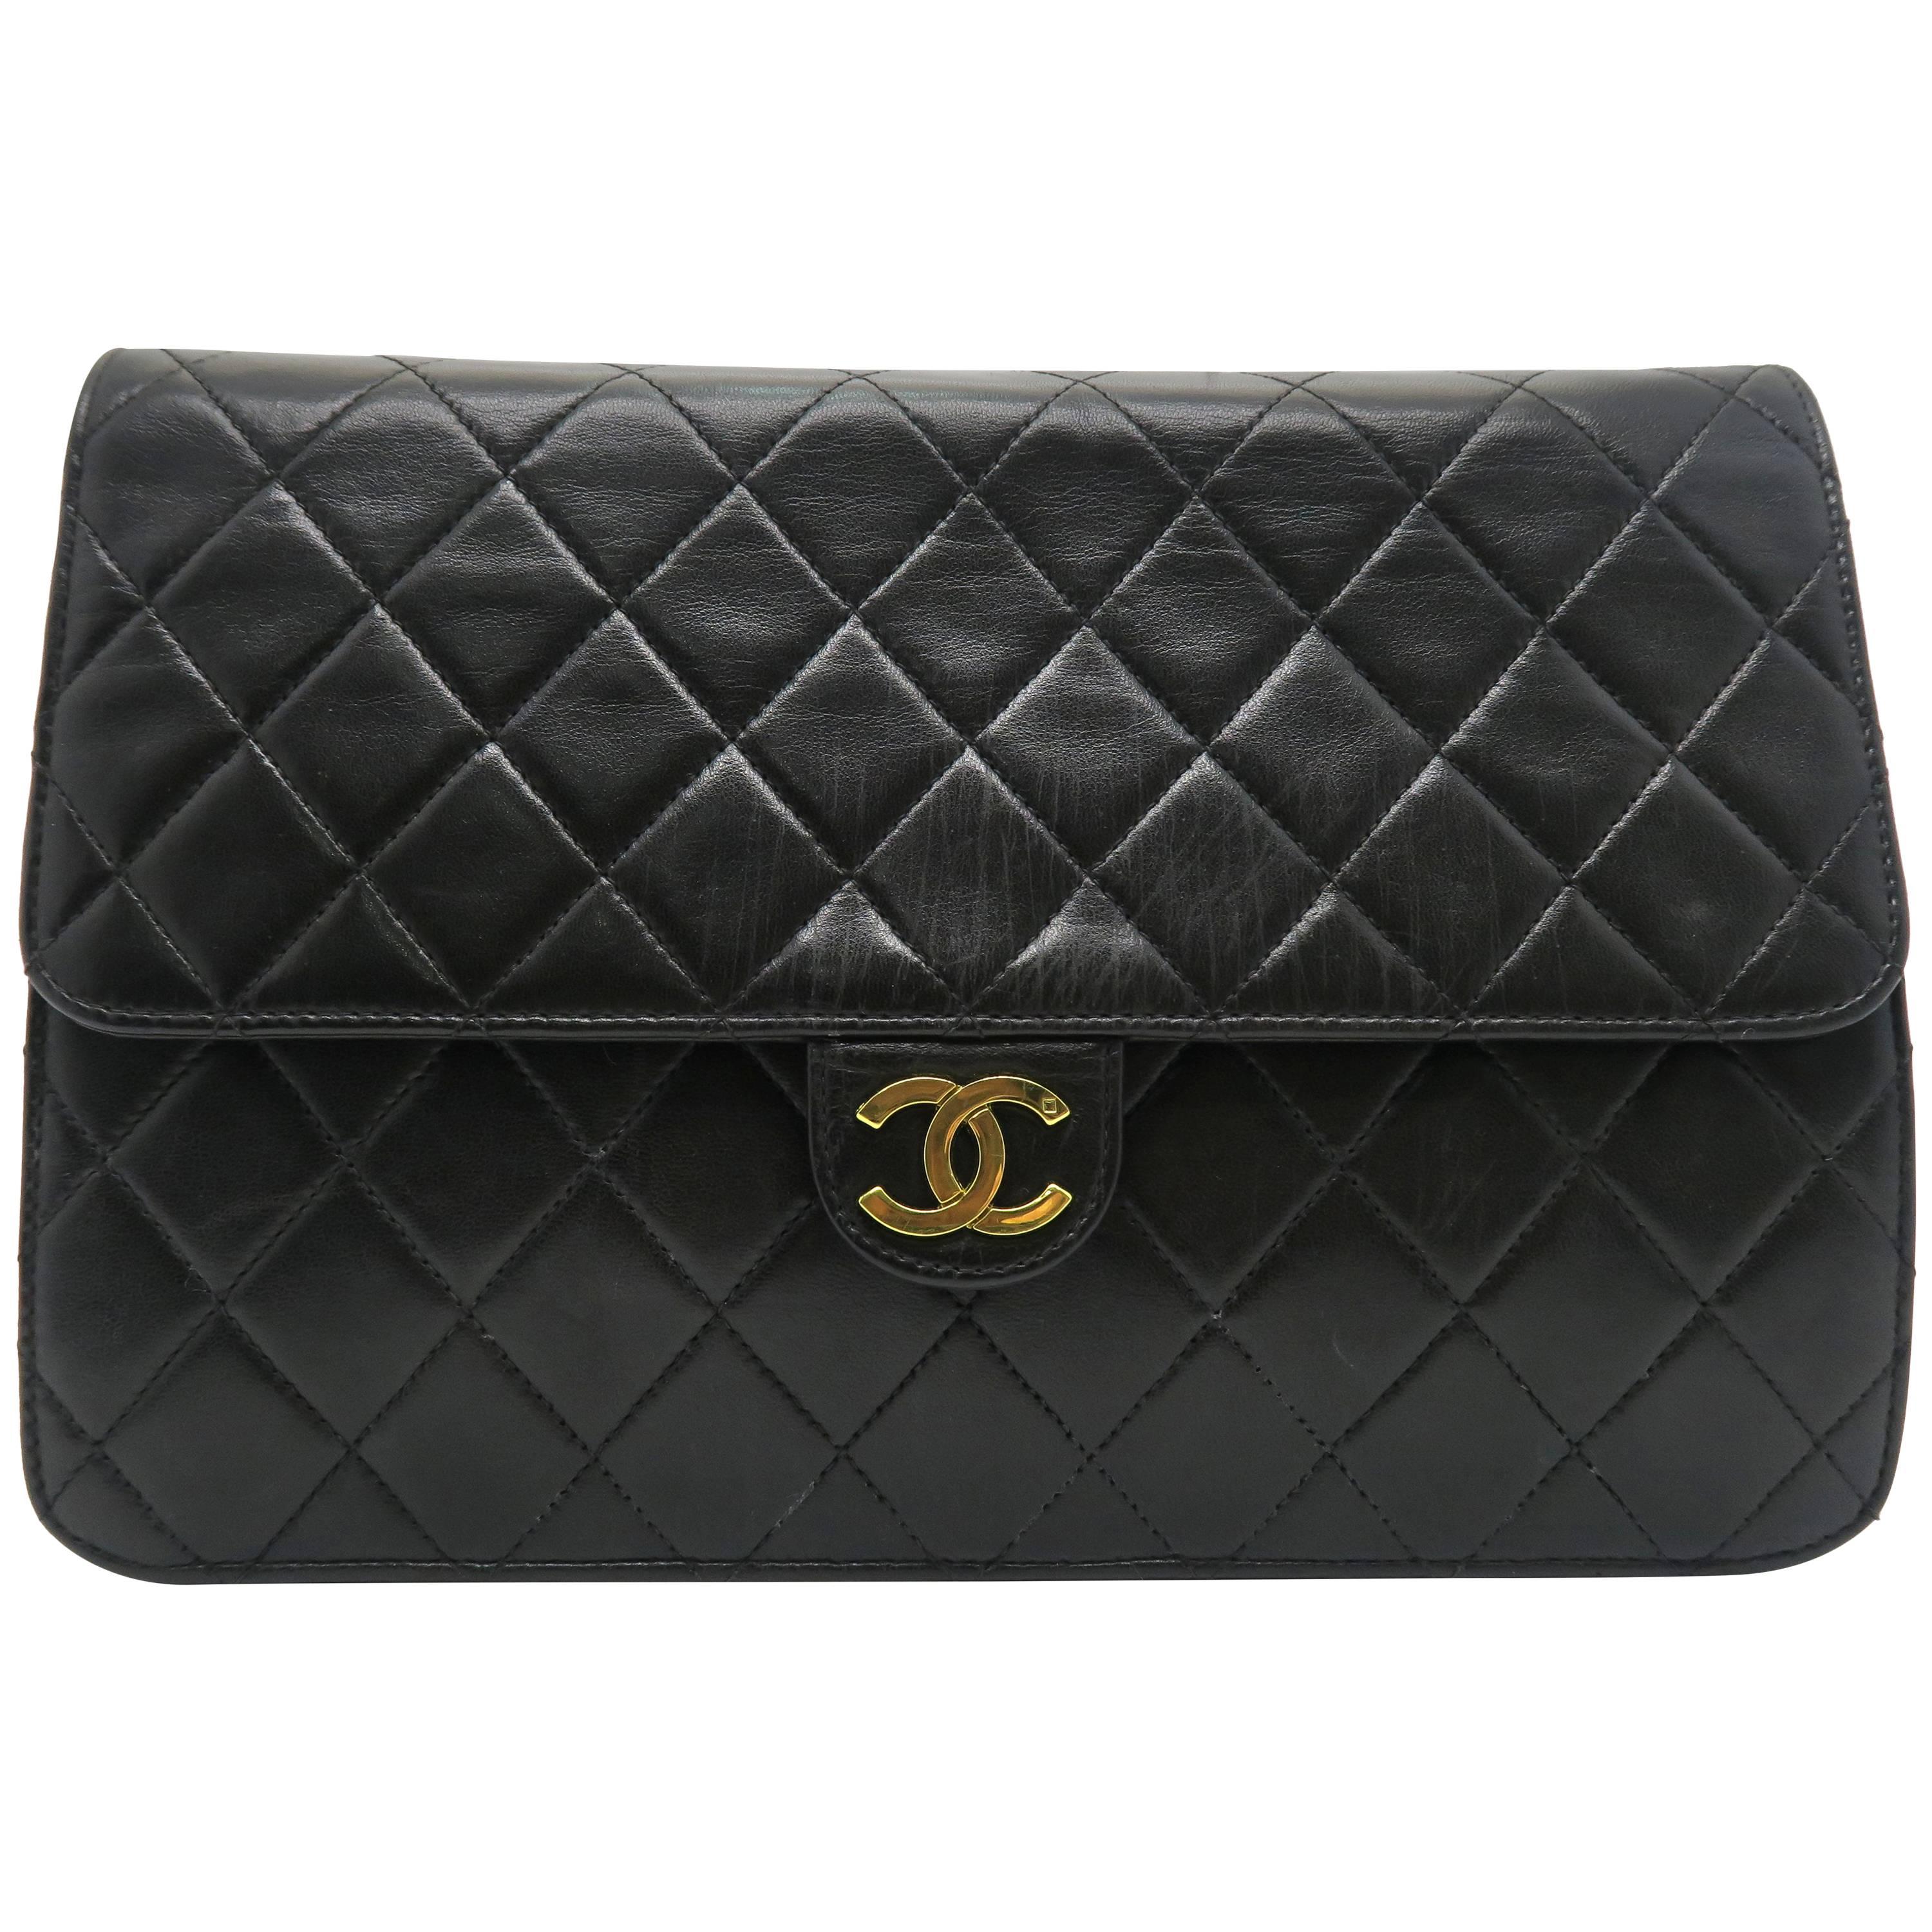 Chanel Black Quilting Lambskin Leather Shoulder Bag For Sale